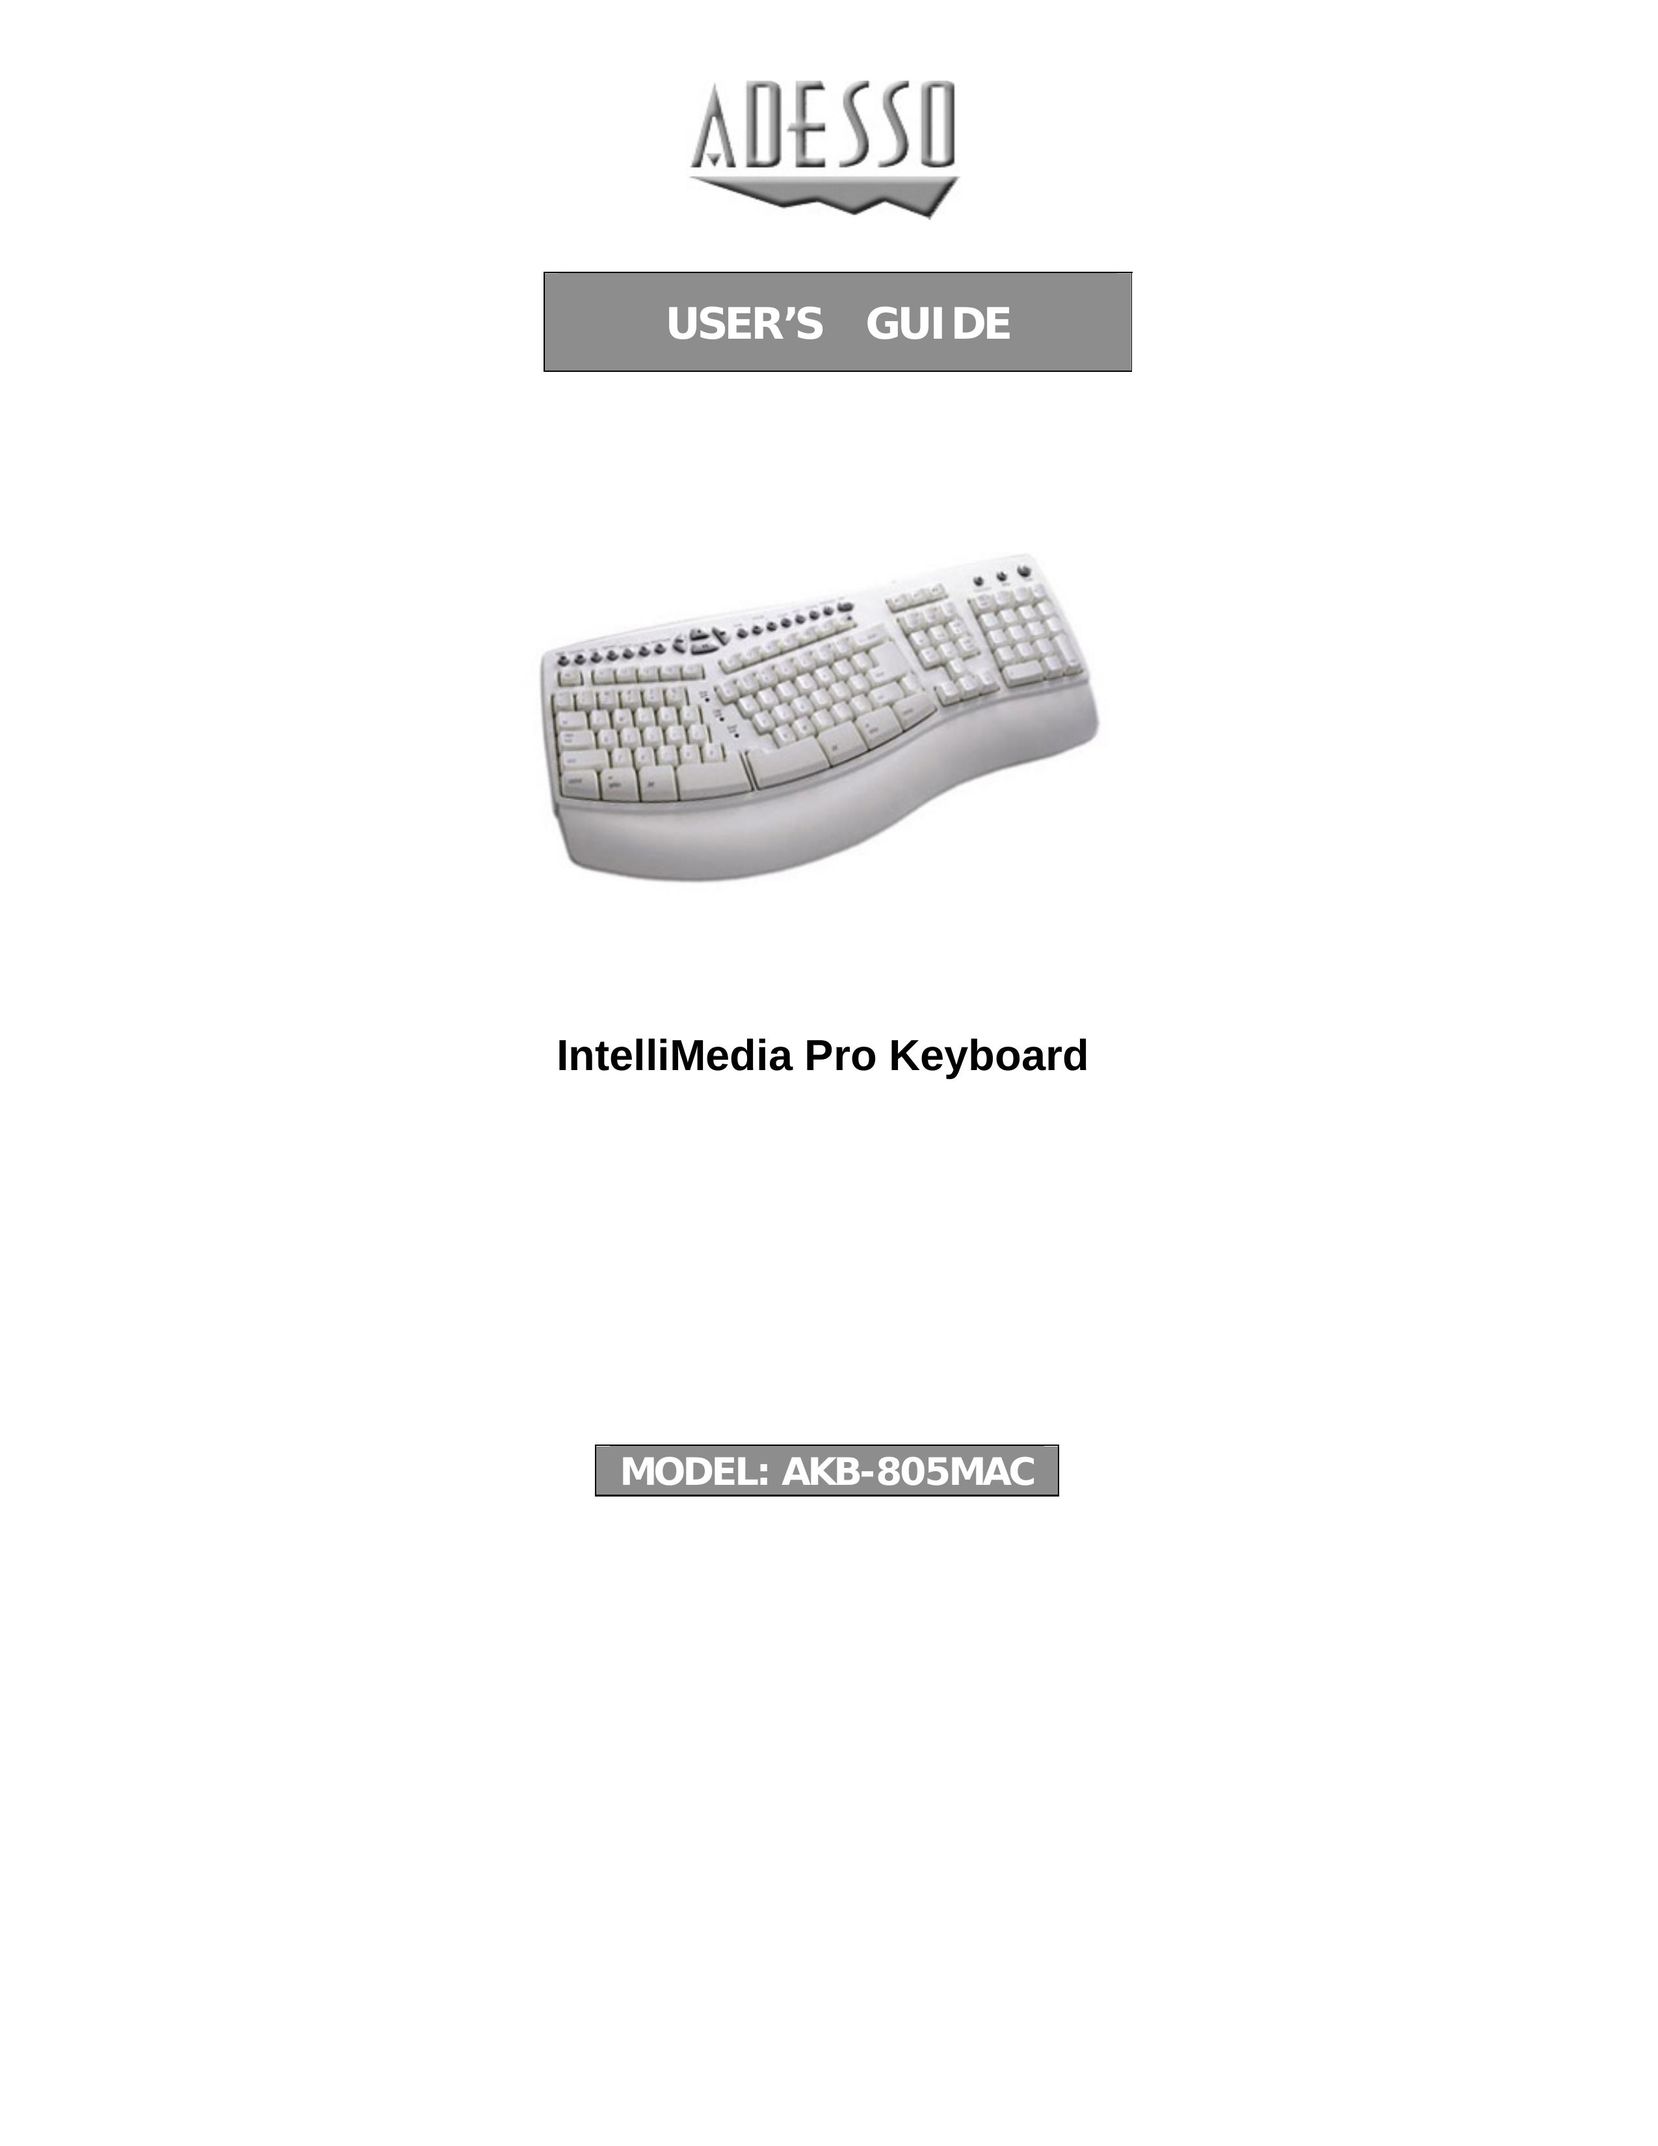 Adesso AKB-805MAC Mouse User Manual